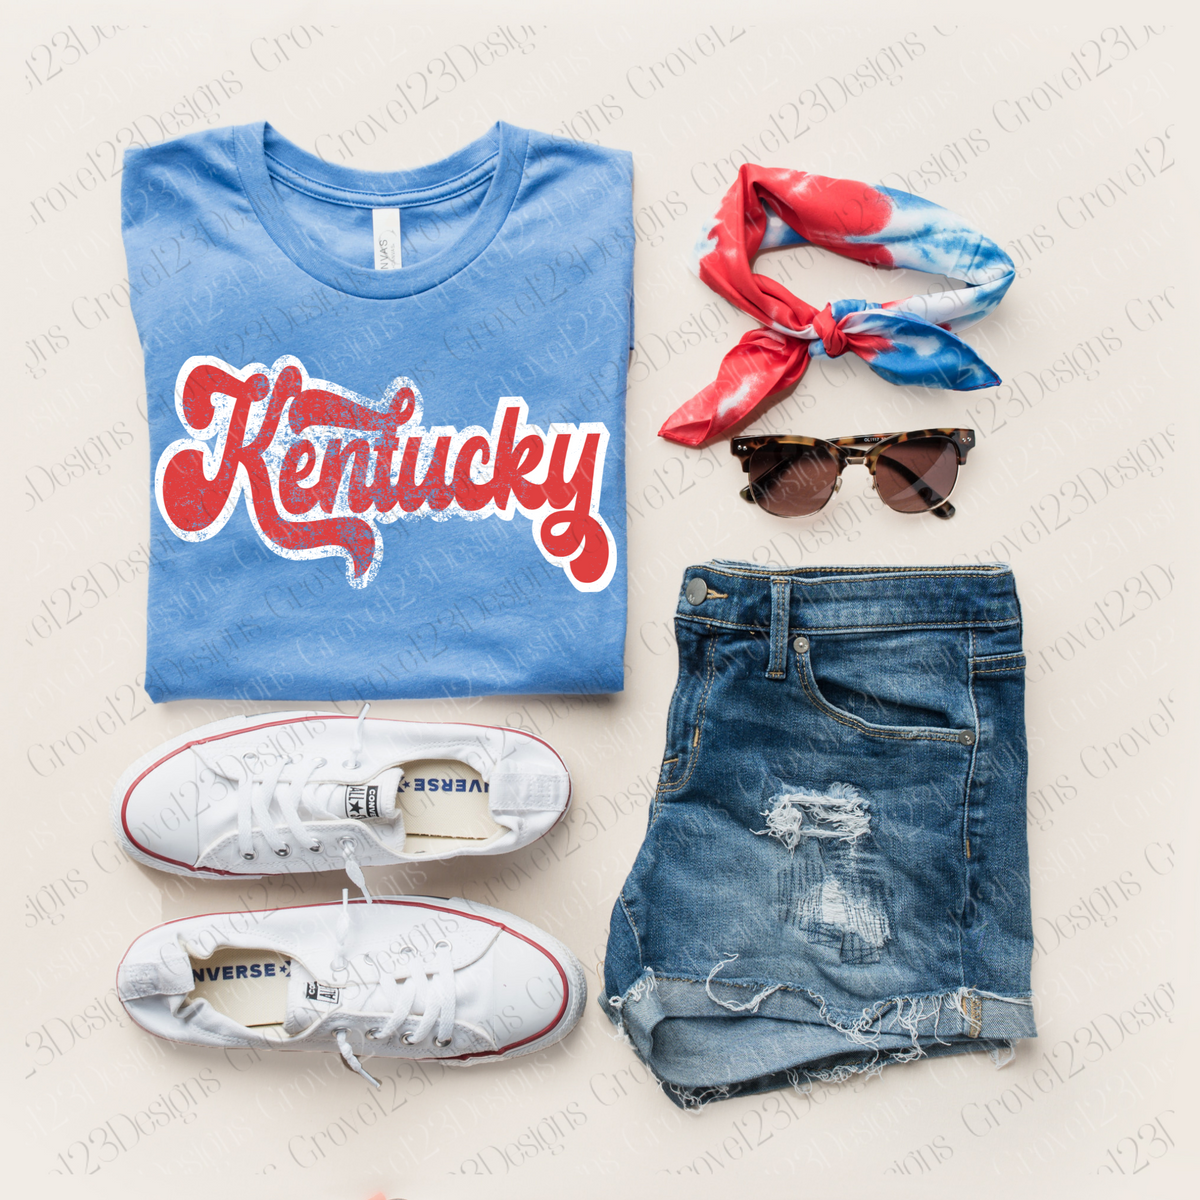 Kentucky Red & White Retro Shadow Distressed